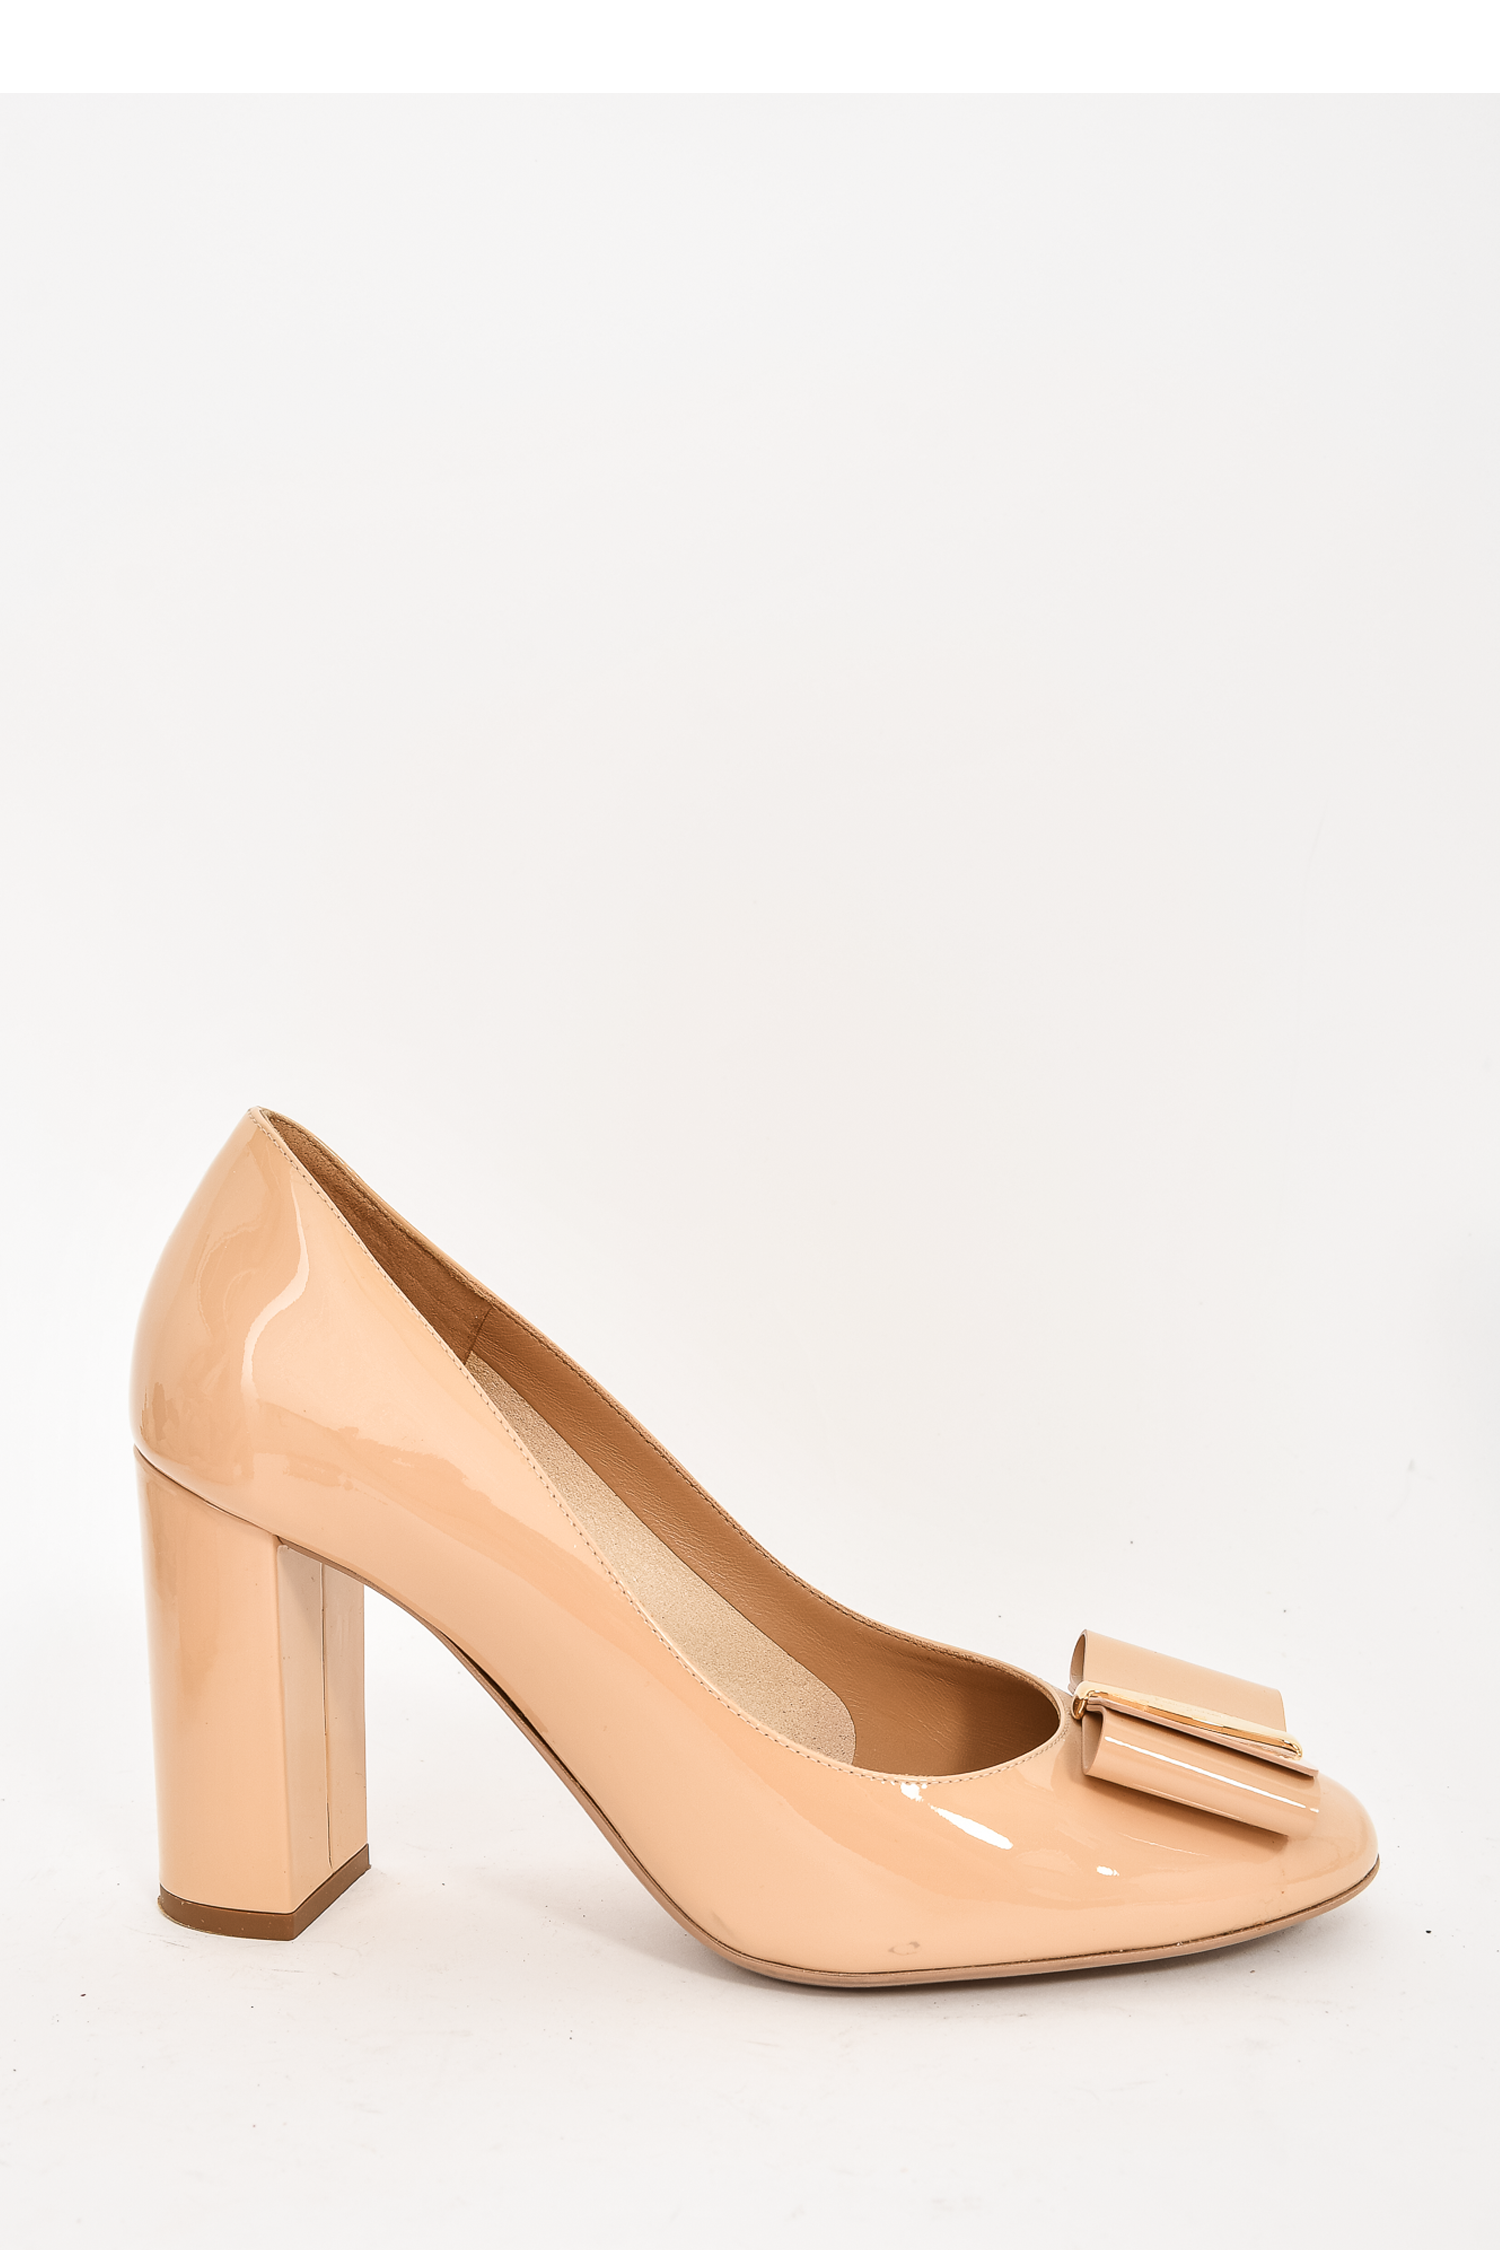 Salvatore Ferragamo Nude Patent Leather Heels Size 9 – Mine & Yours